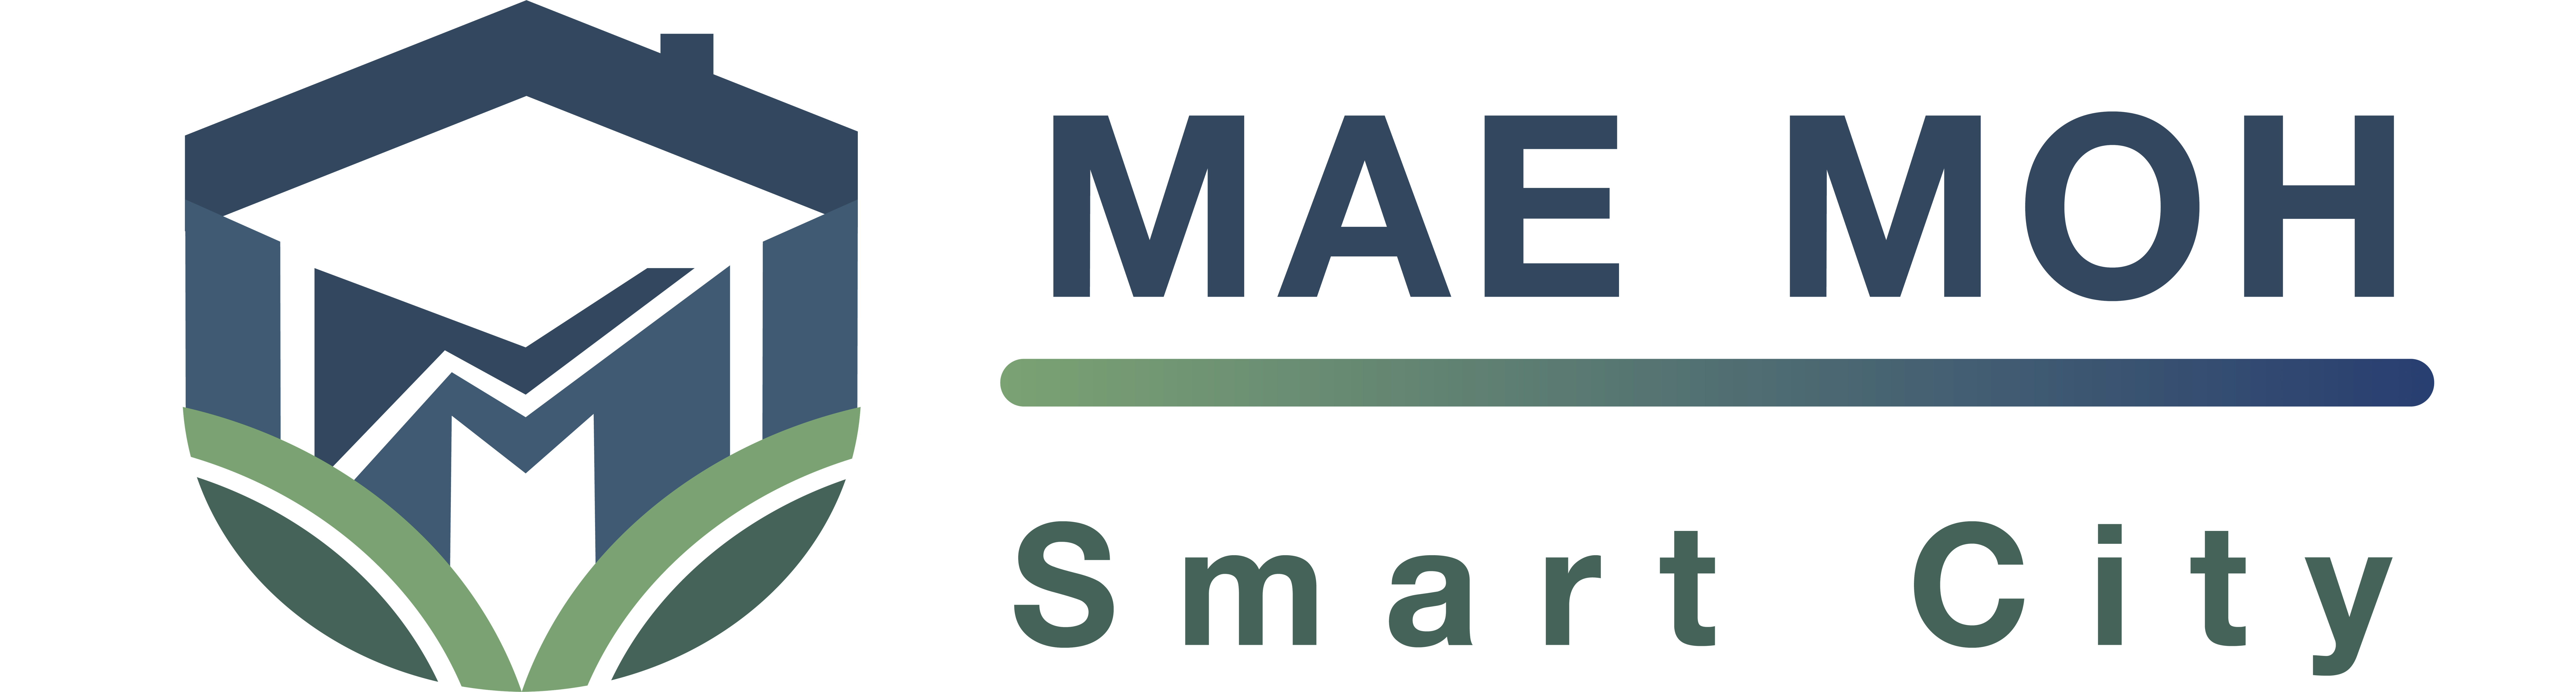 Mae Moh Smart City